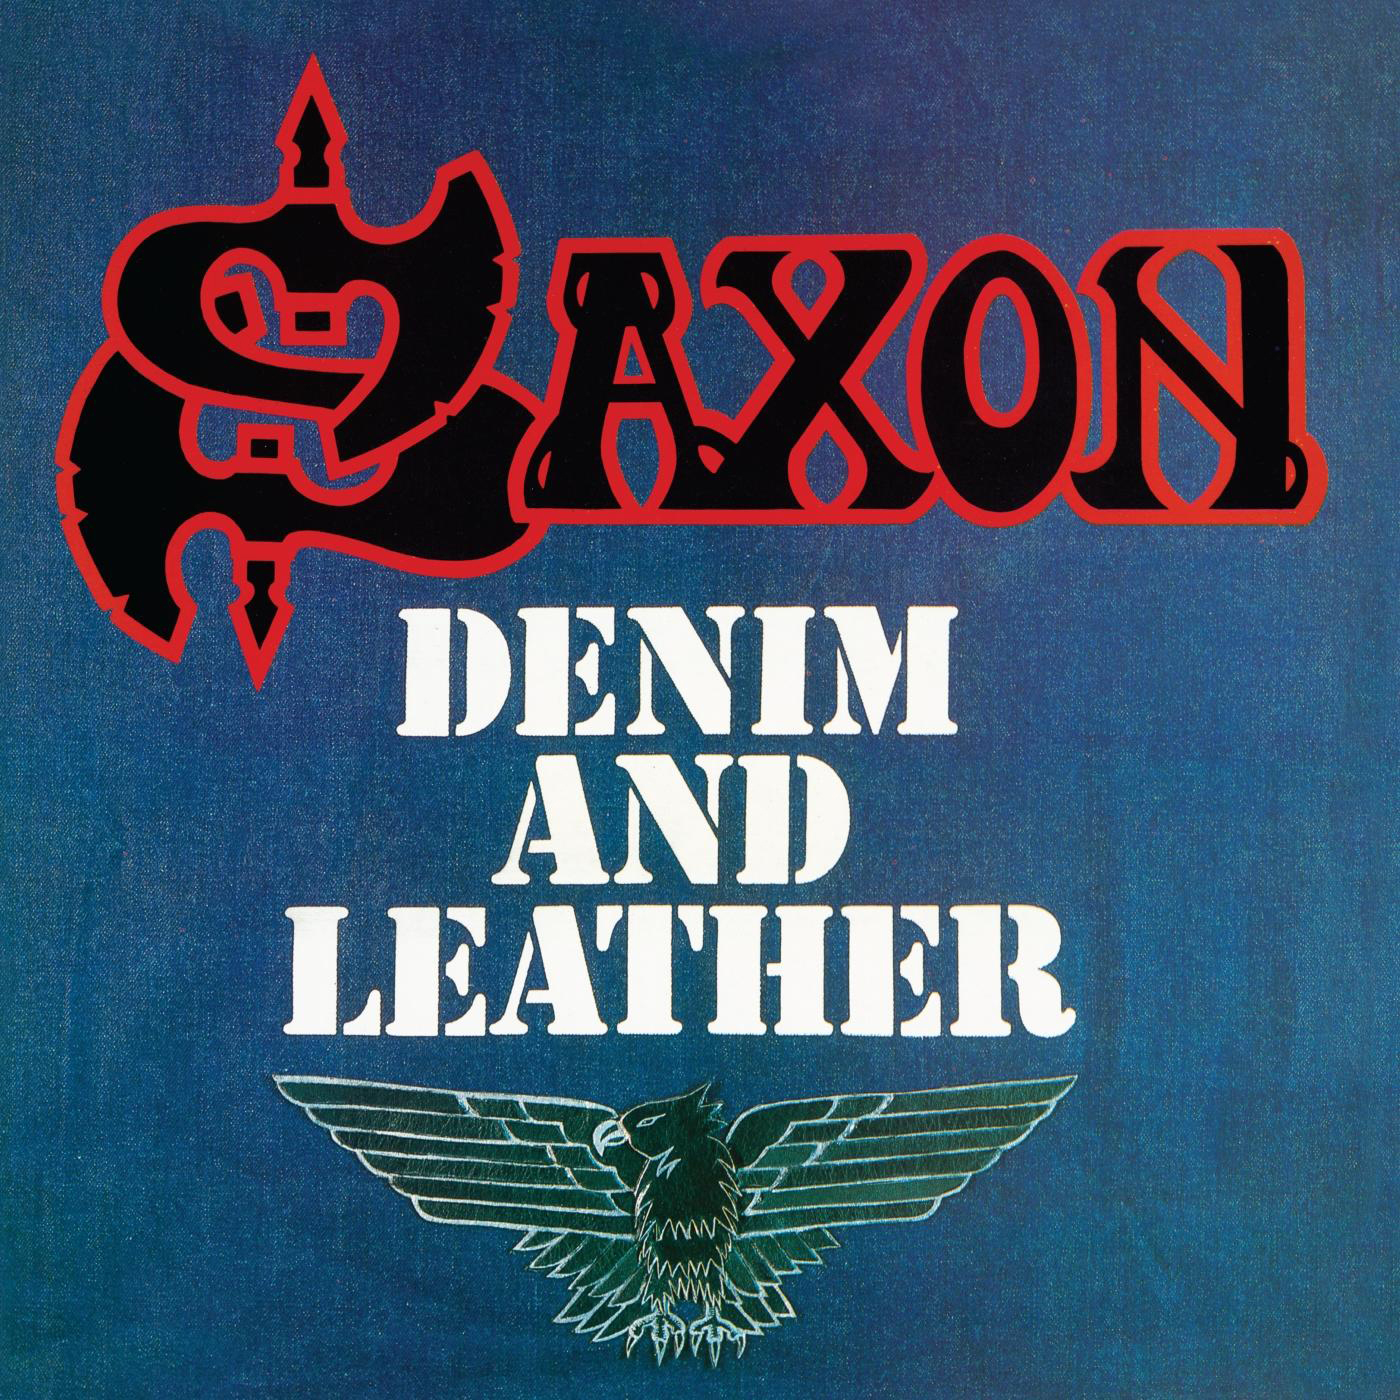 Saxon - Leather - Denim (Vinyl) and